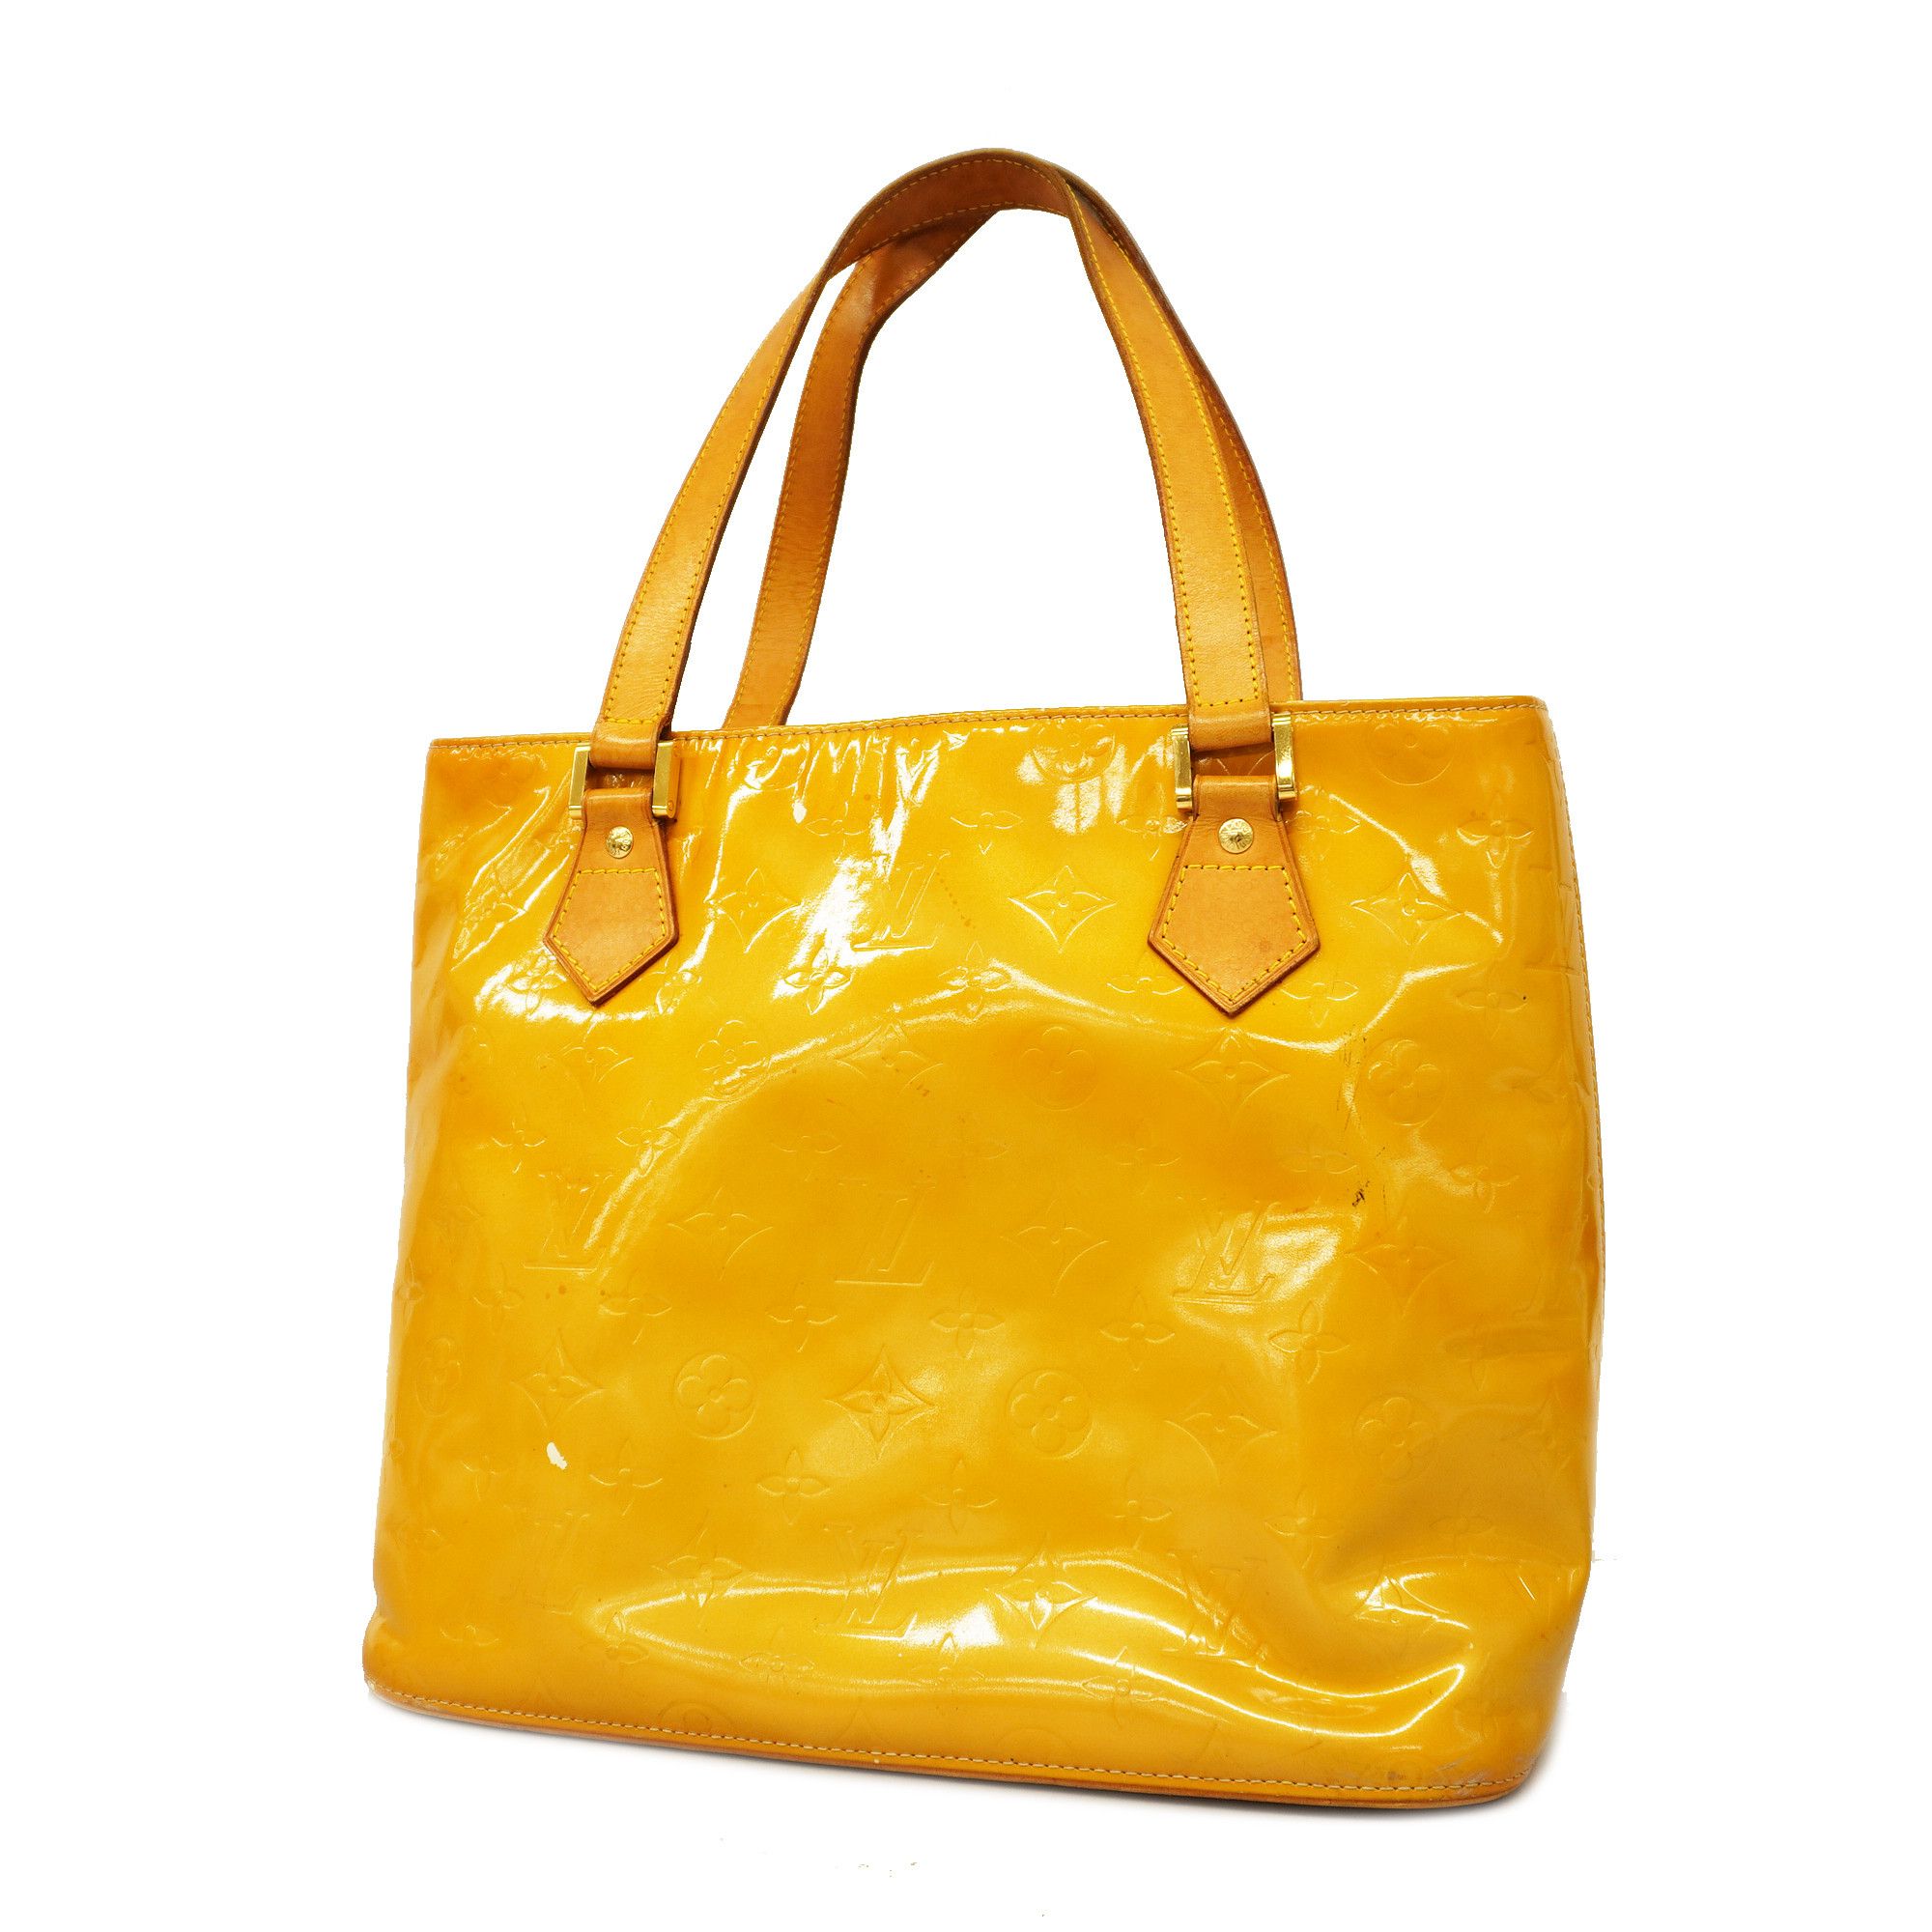 LOUIS VUITTON Tote Bag M91004 Houston Monogram Vernis yellow Women